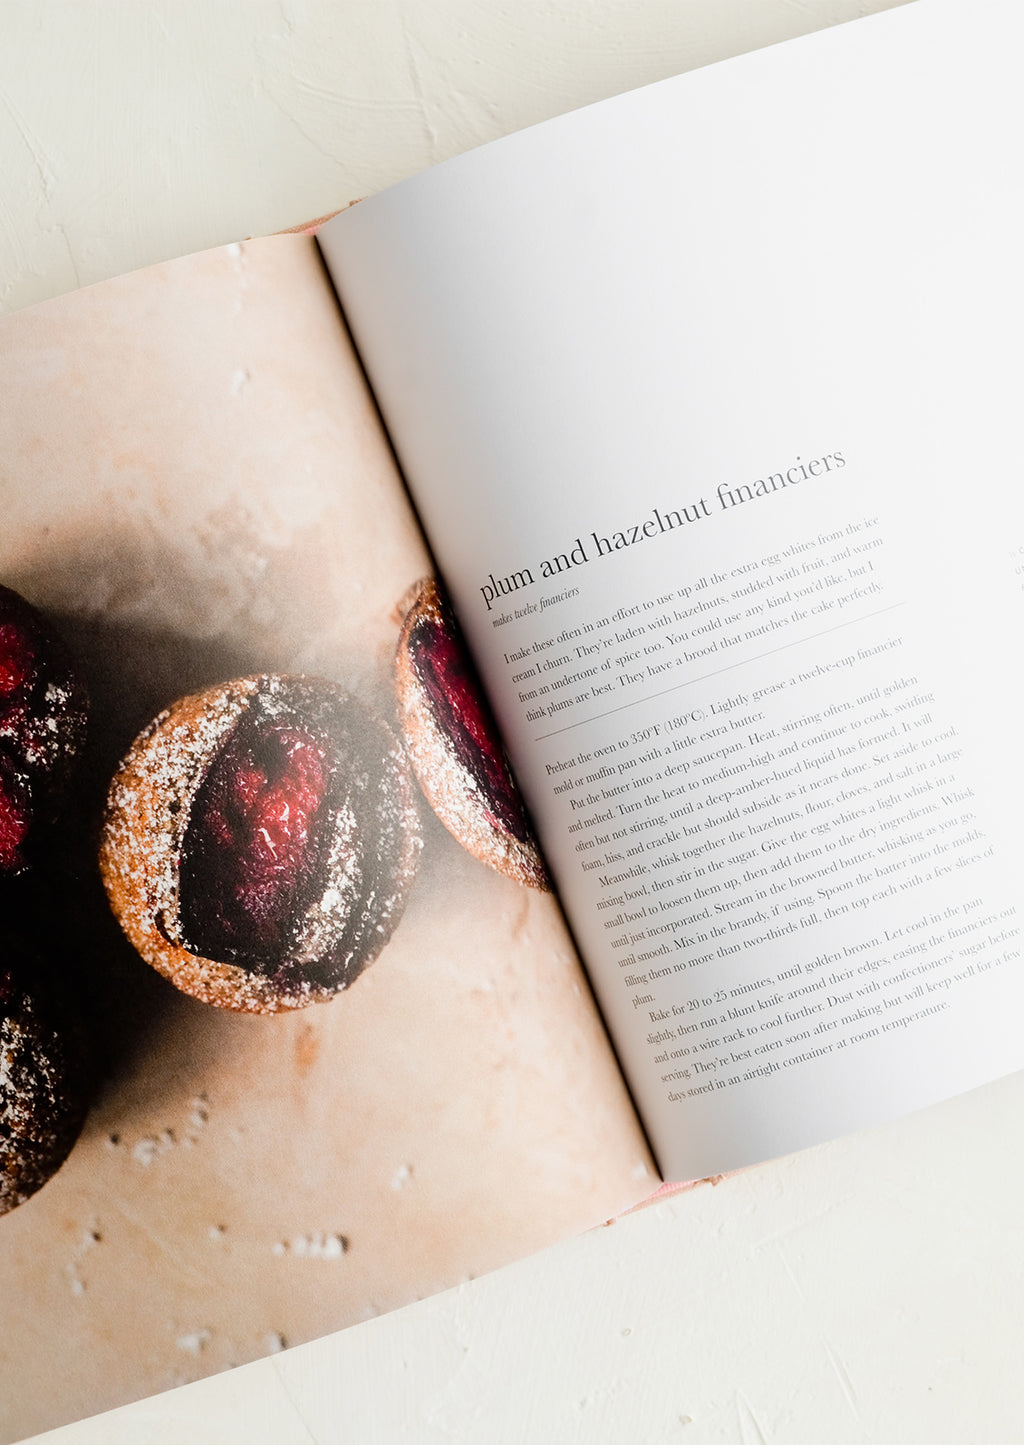 2: A recipe cookbook opened to recipe for plum and hazelnut financiers.